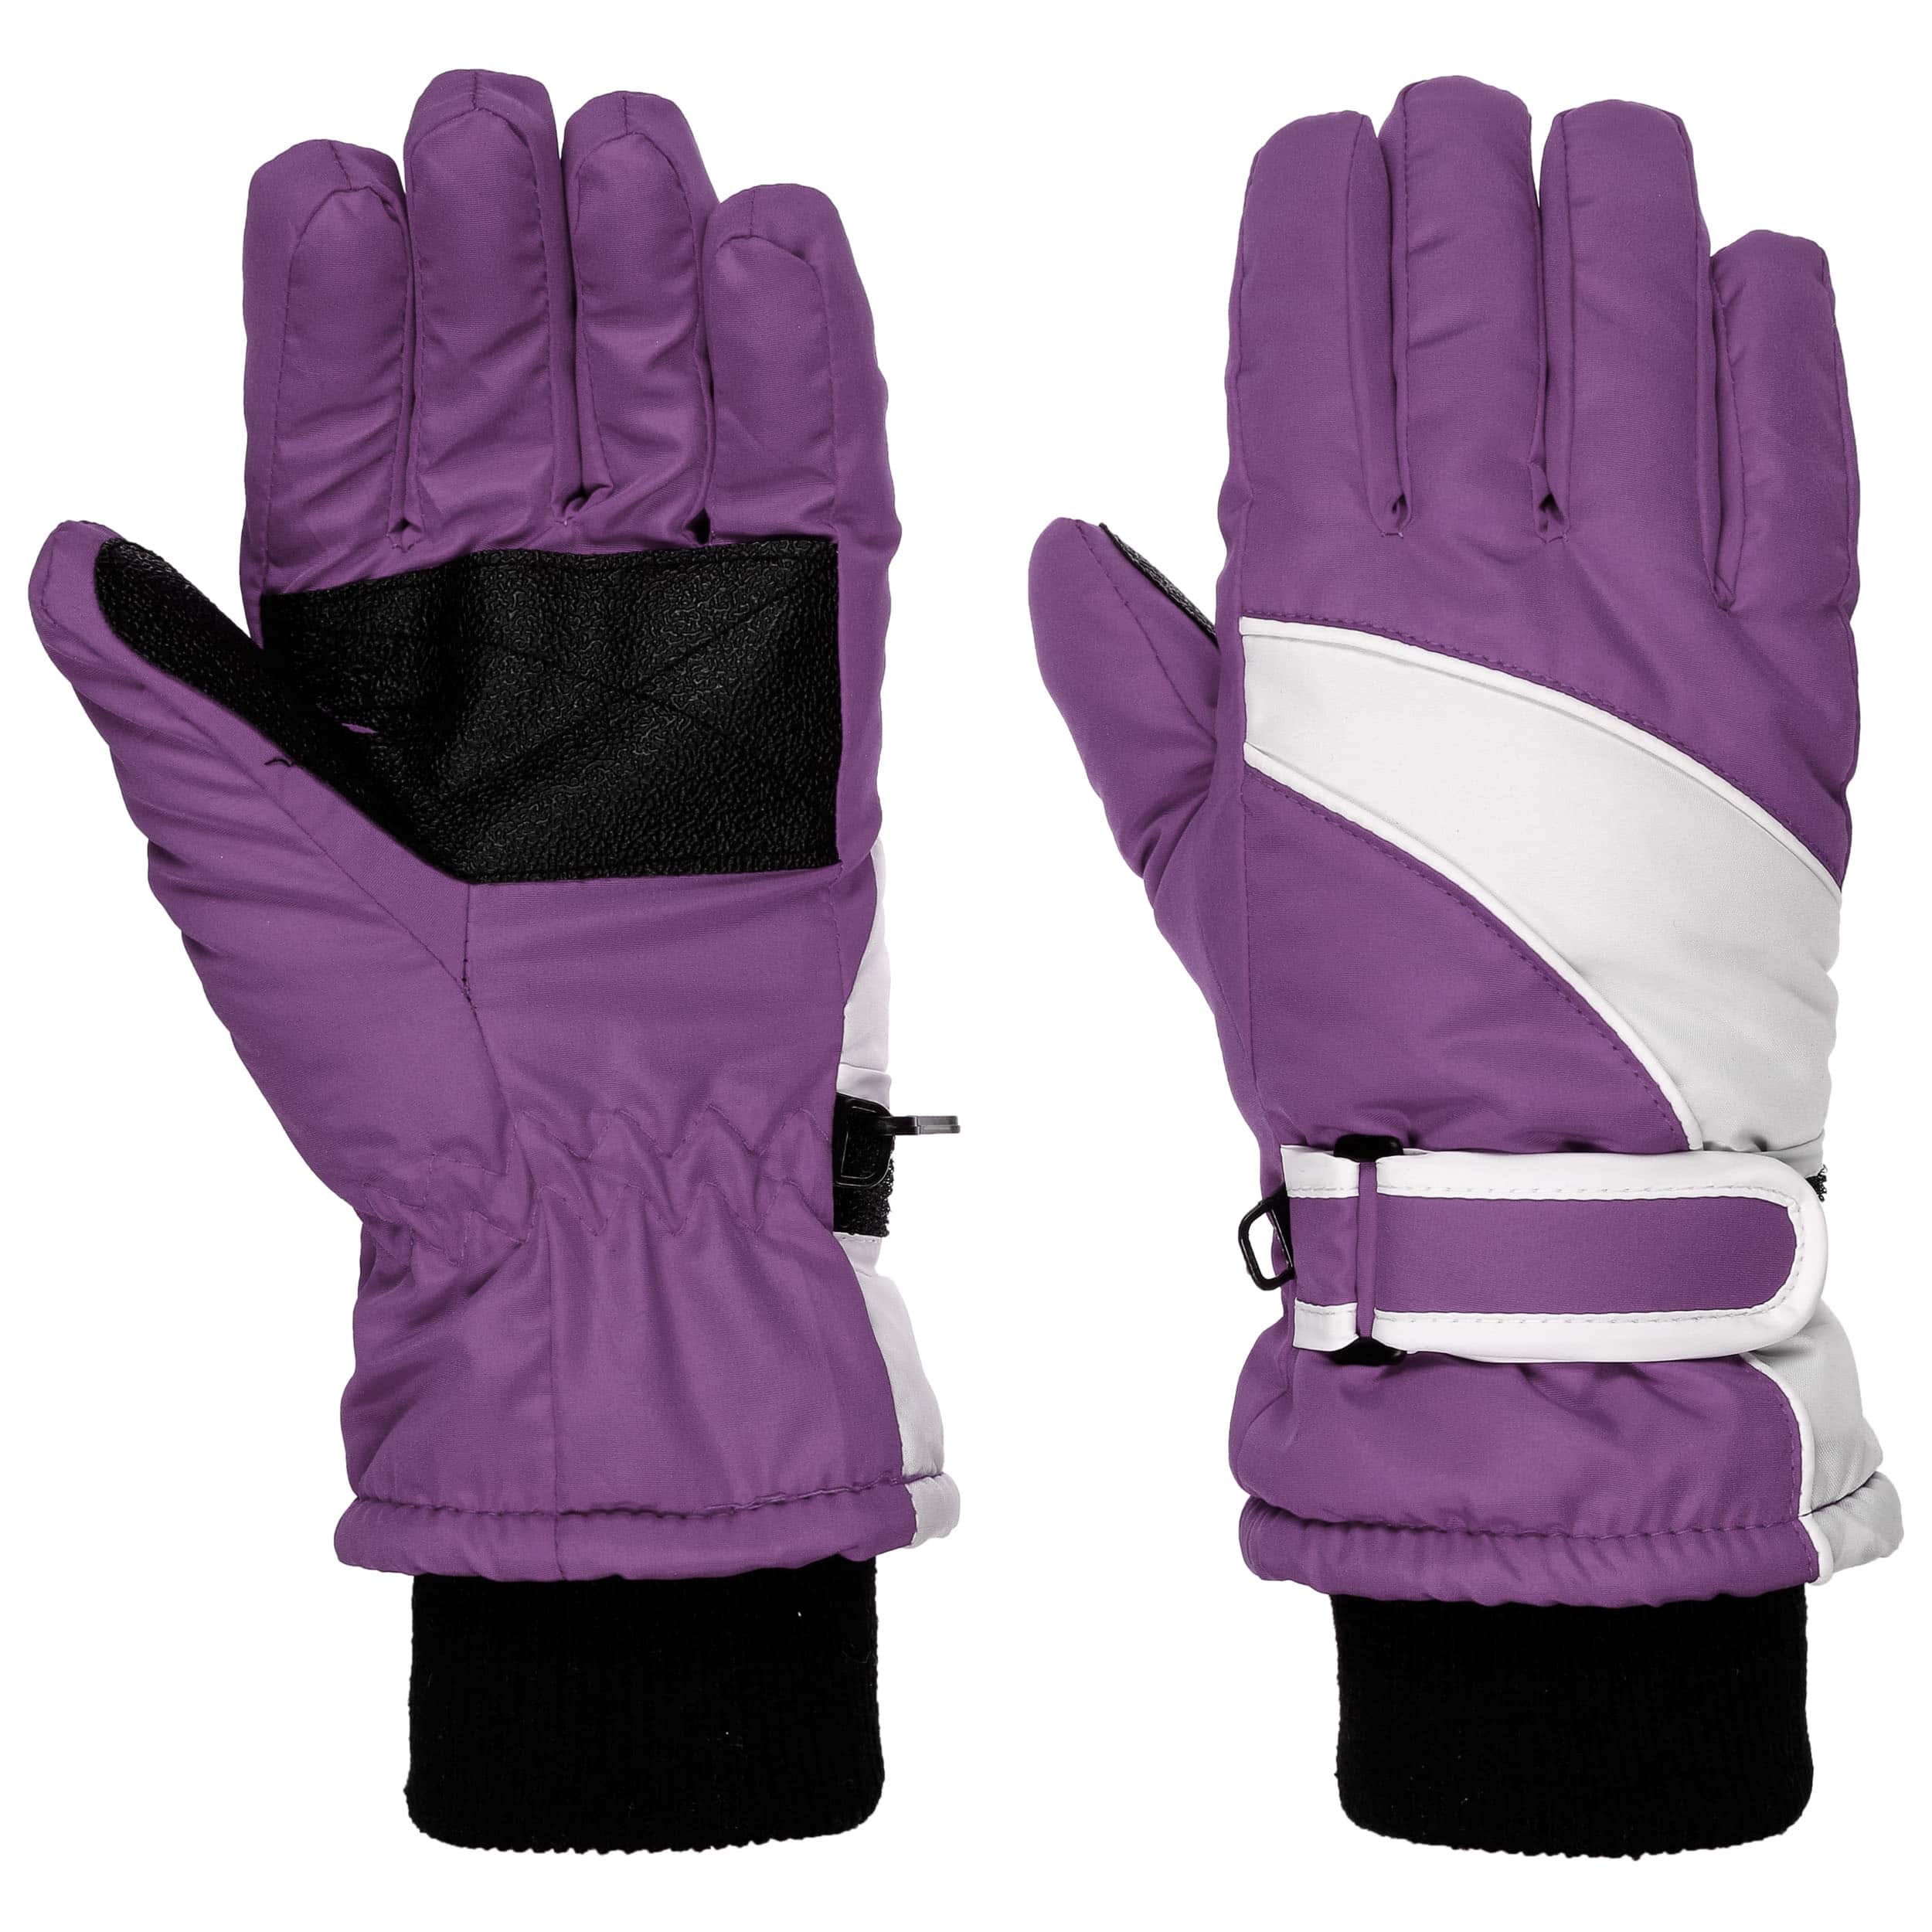 Twotone Women Ski Gloves by Lipodo - 21 